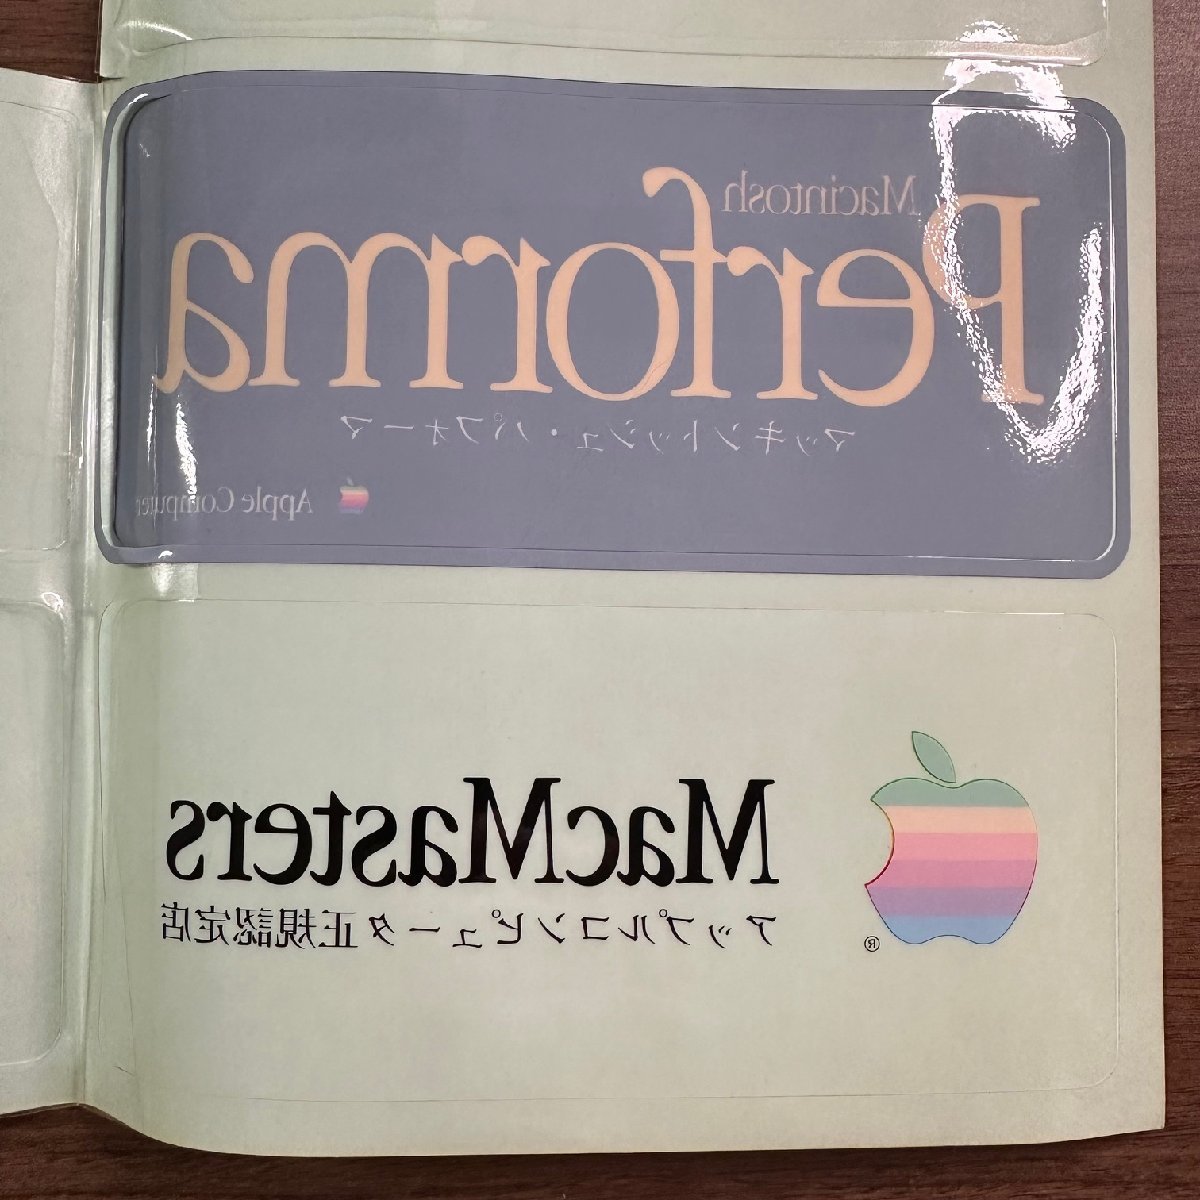 【Apple Computer】旧虹色リンゴシール レインボーステッカー Performa 漢字Talk7.5 MacMaster おまとめ 希少 収集家放出品 99の画像4